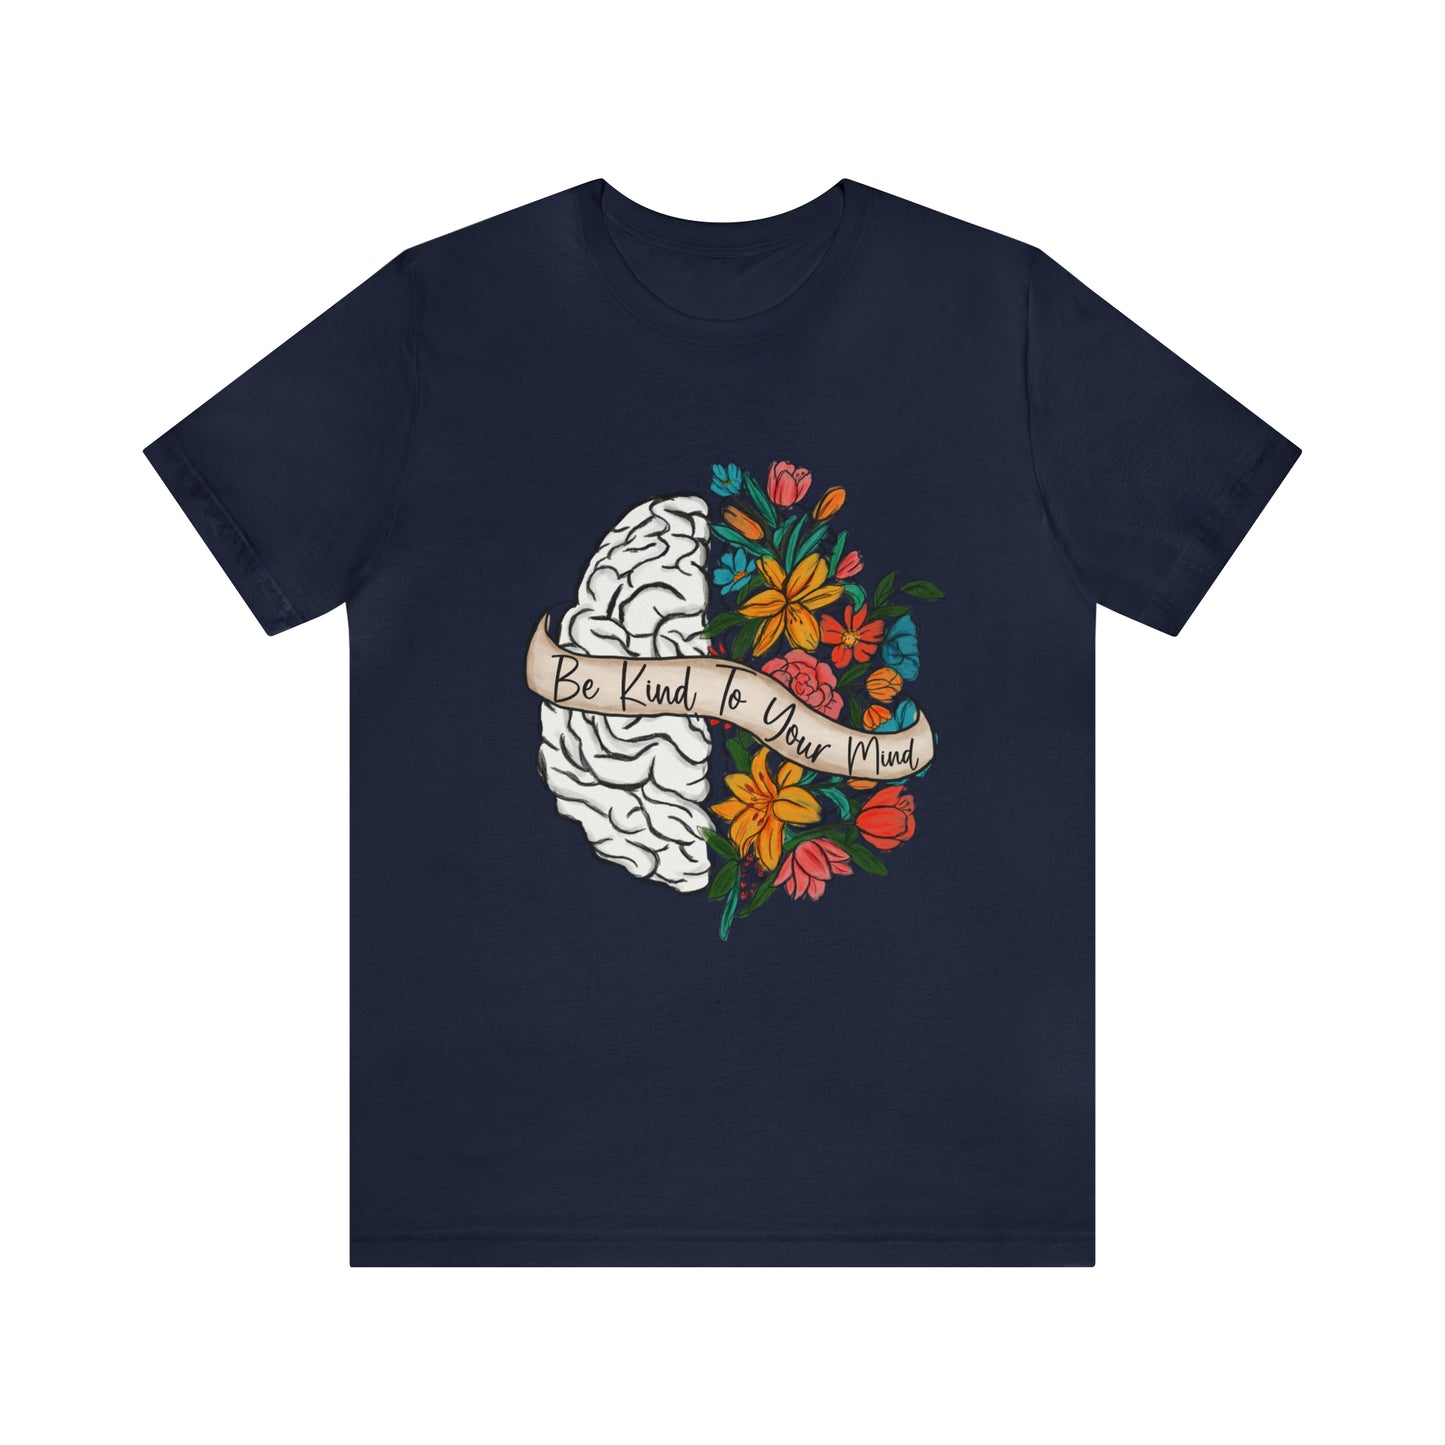 Be Kind To Your Mind Shirt, Kindness Shirt, Mental Health Awareness Shirt, Mental Health Shirt, Inspirational Shirt, T632